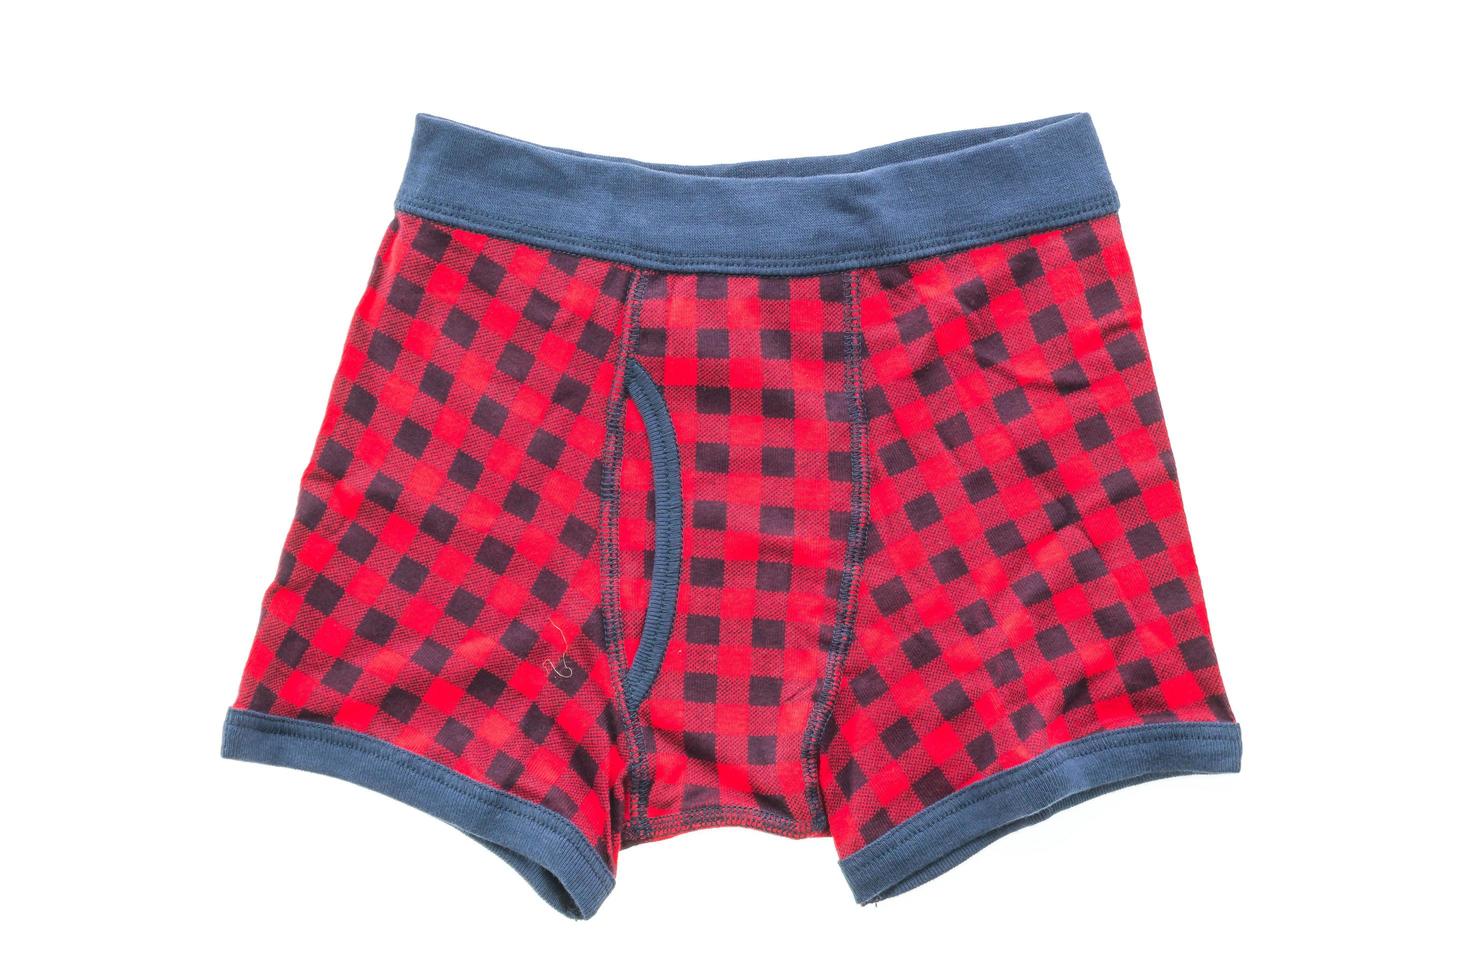 Short underwear for boys photo